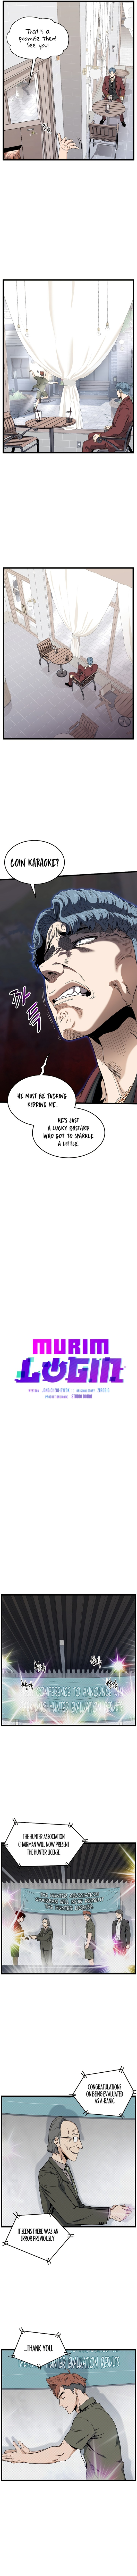 Murim Login - Chapter 139 Page 5